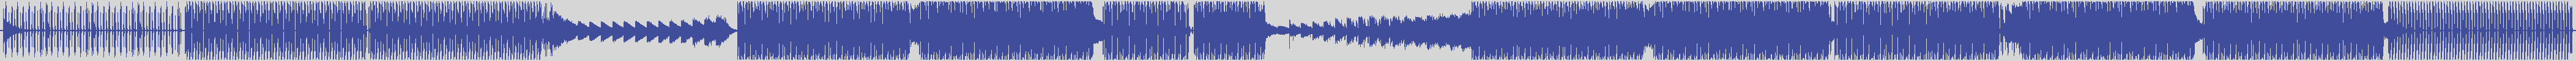 smilax_productions [SPMOL060] Stylus Robb, Mattias - Wow! [Michel La Vie Rmx] audio wave form